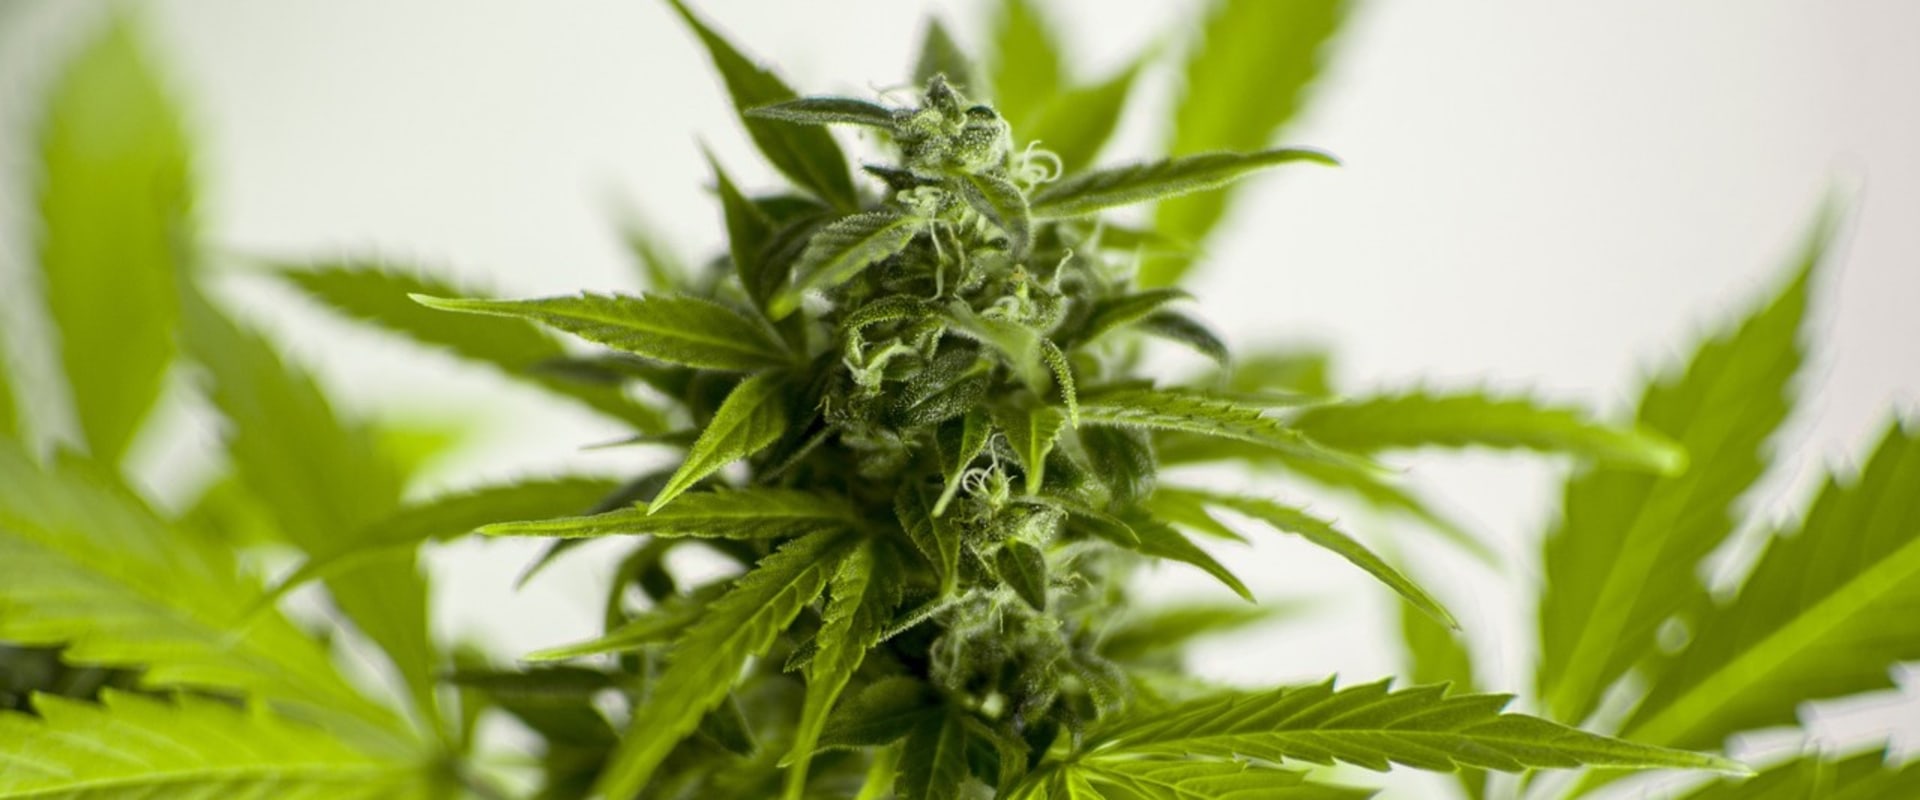 How does legalization affect drug use?